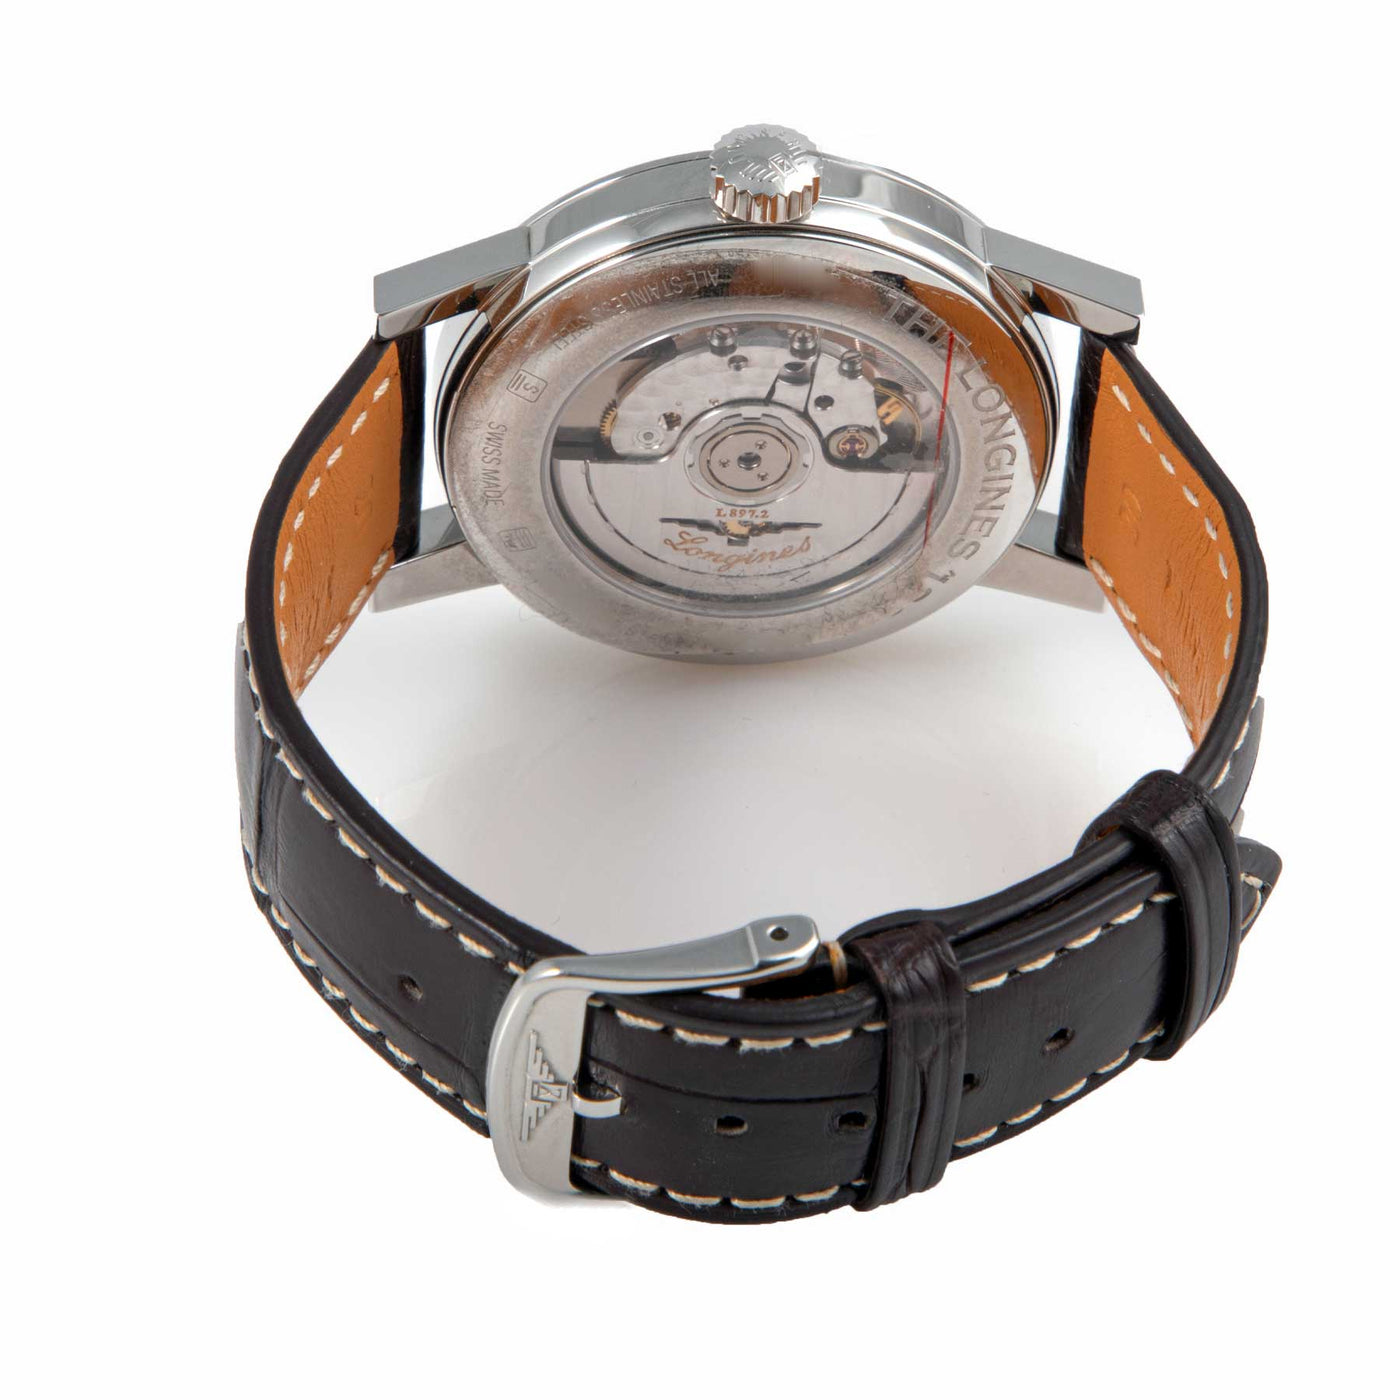 The Longines 1832-Timepiece360